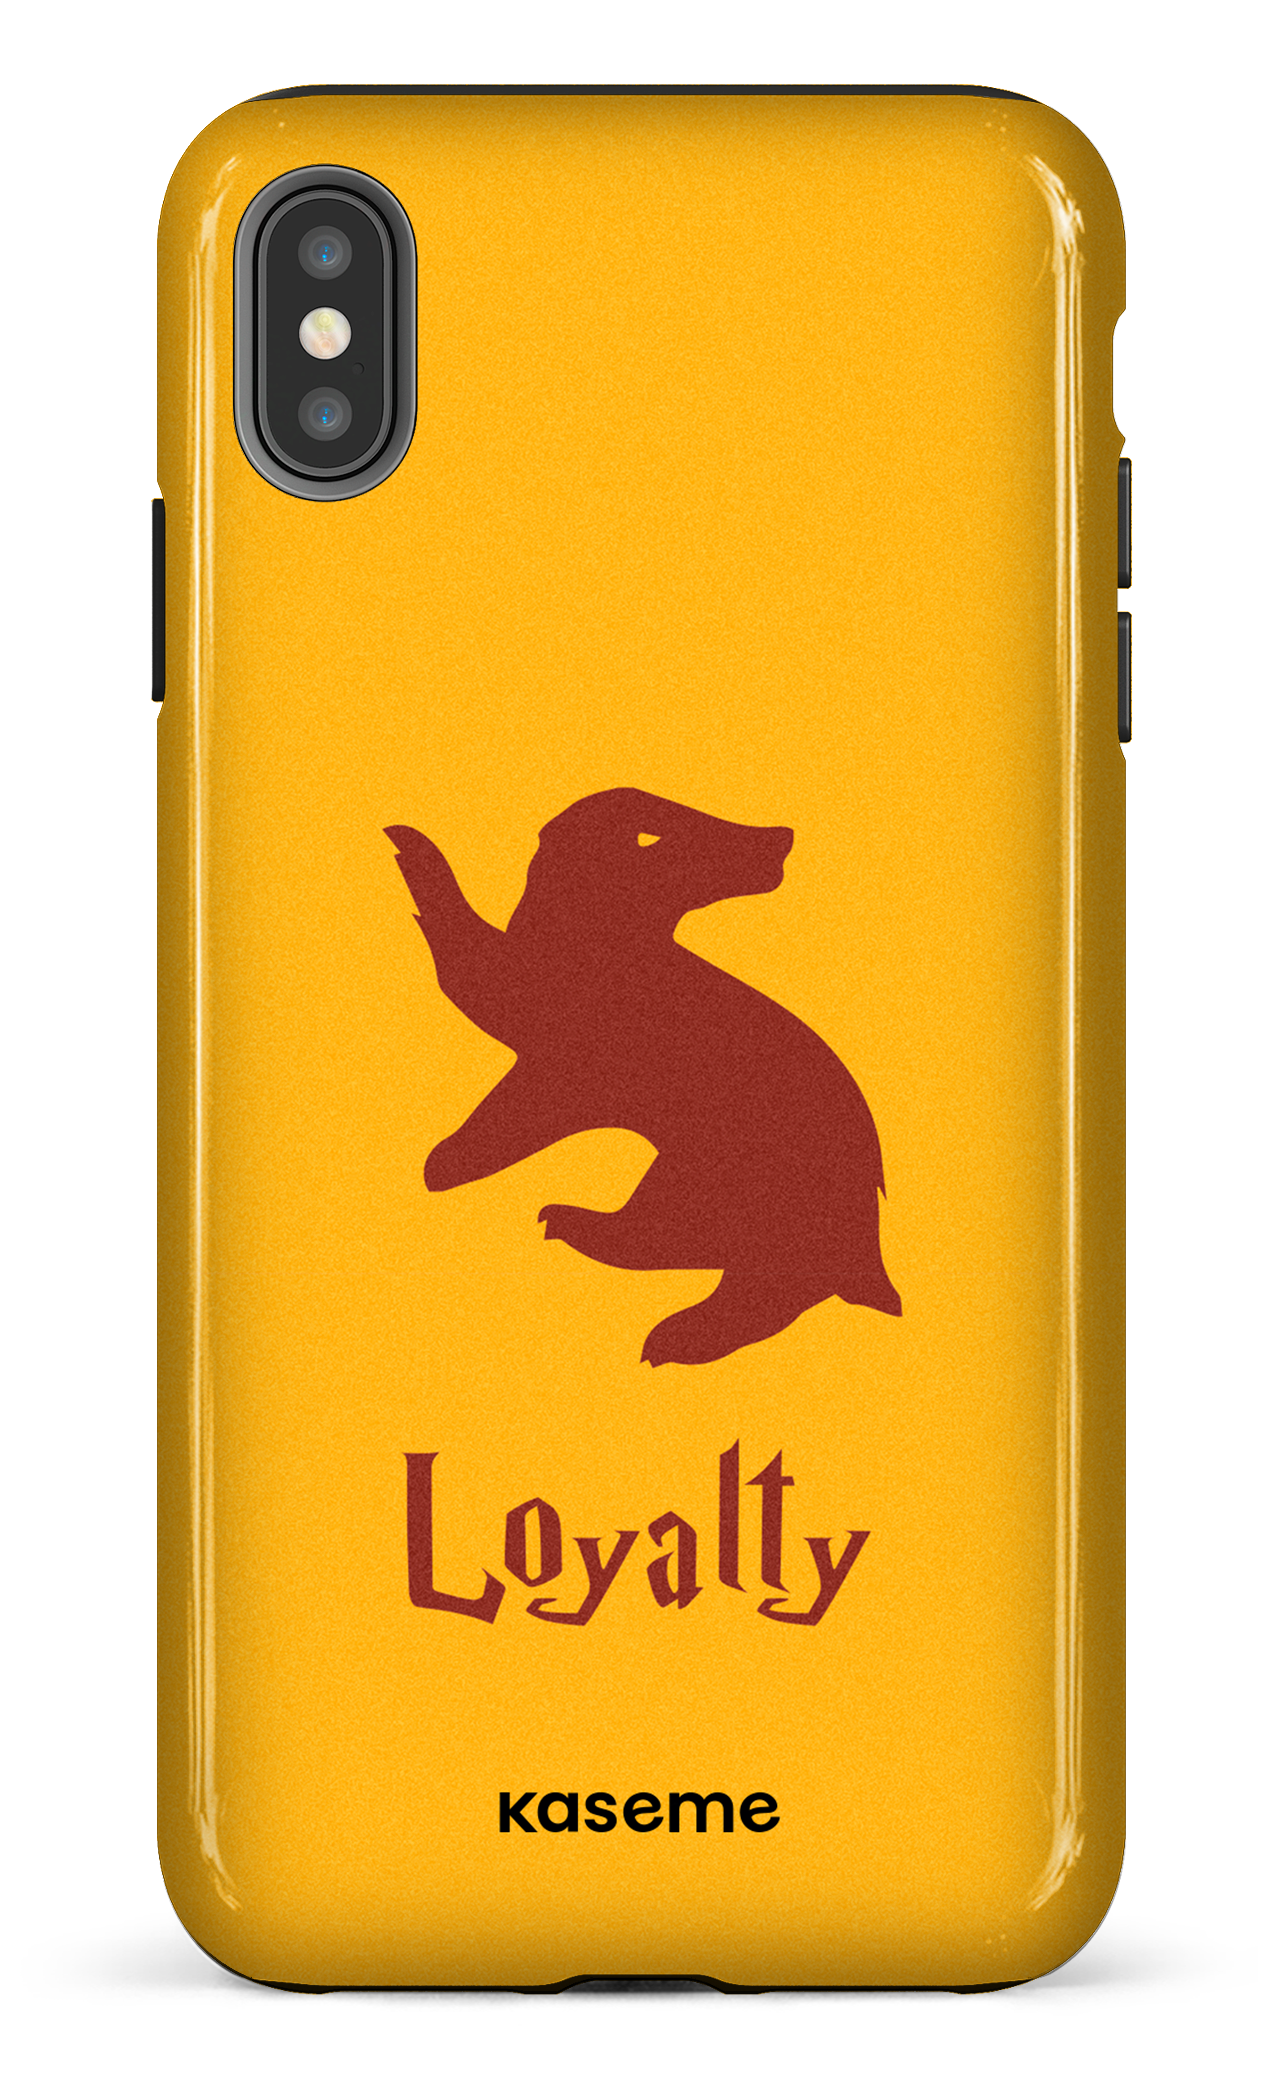 Loyalty - iPhone XS Max